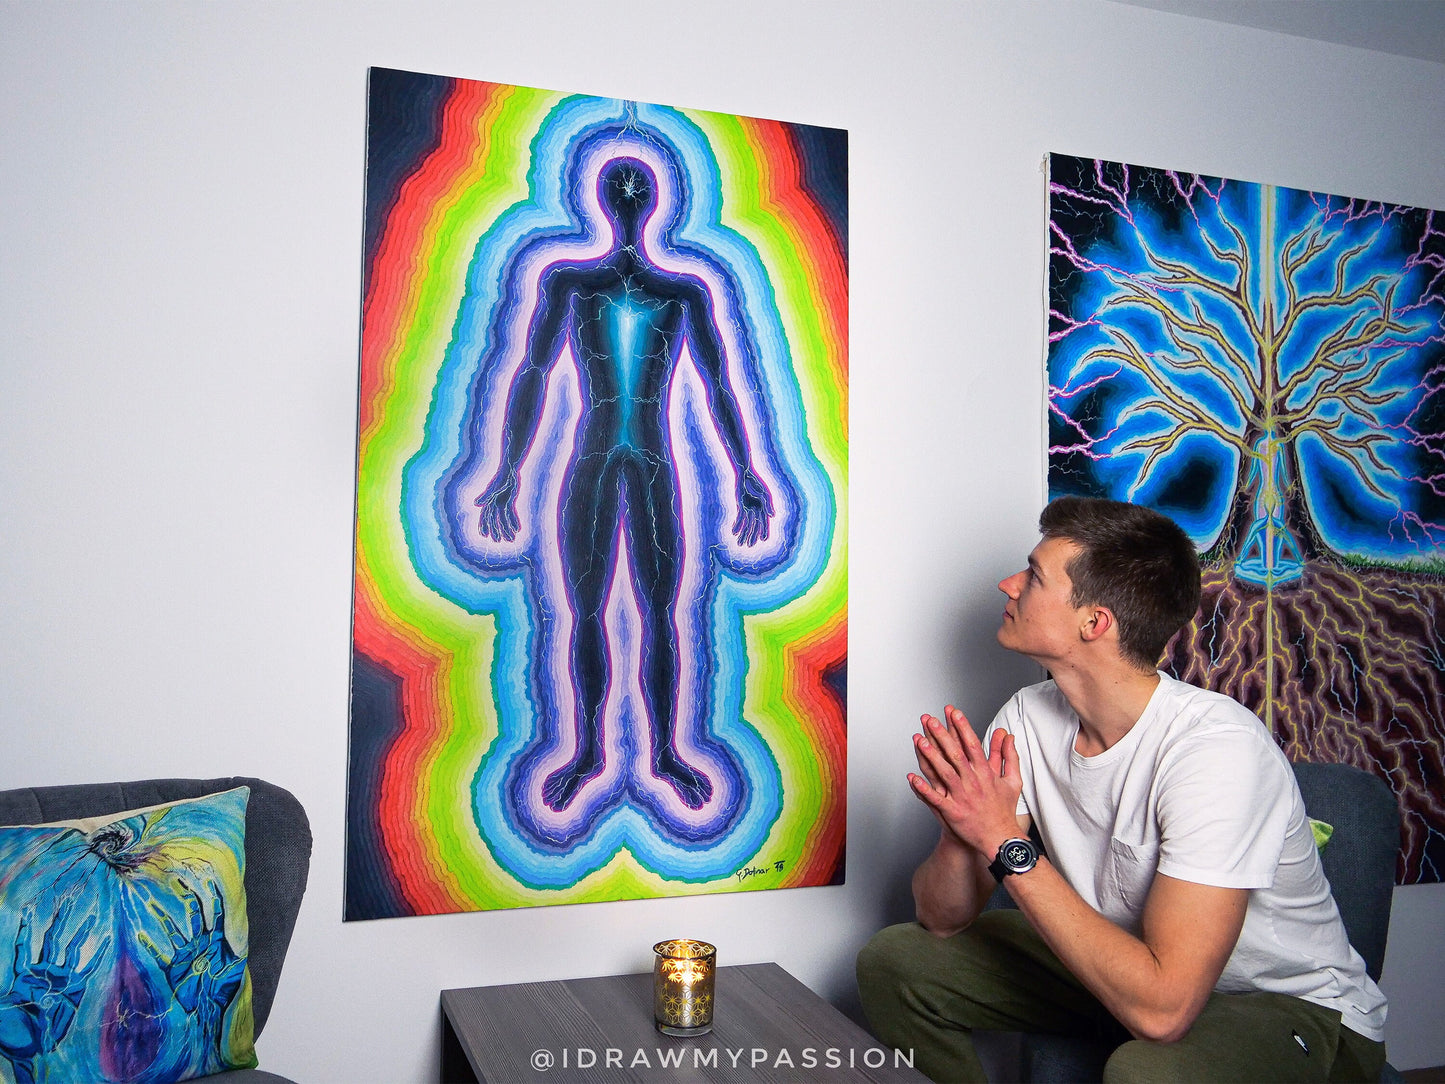 Energetic Body - Aura | Intuitive Energetic Canvas Print